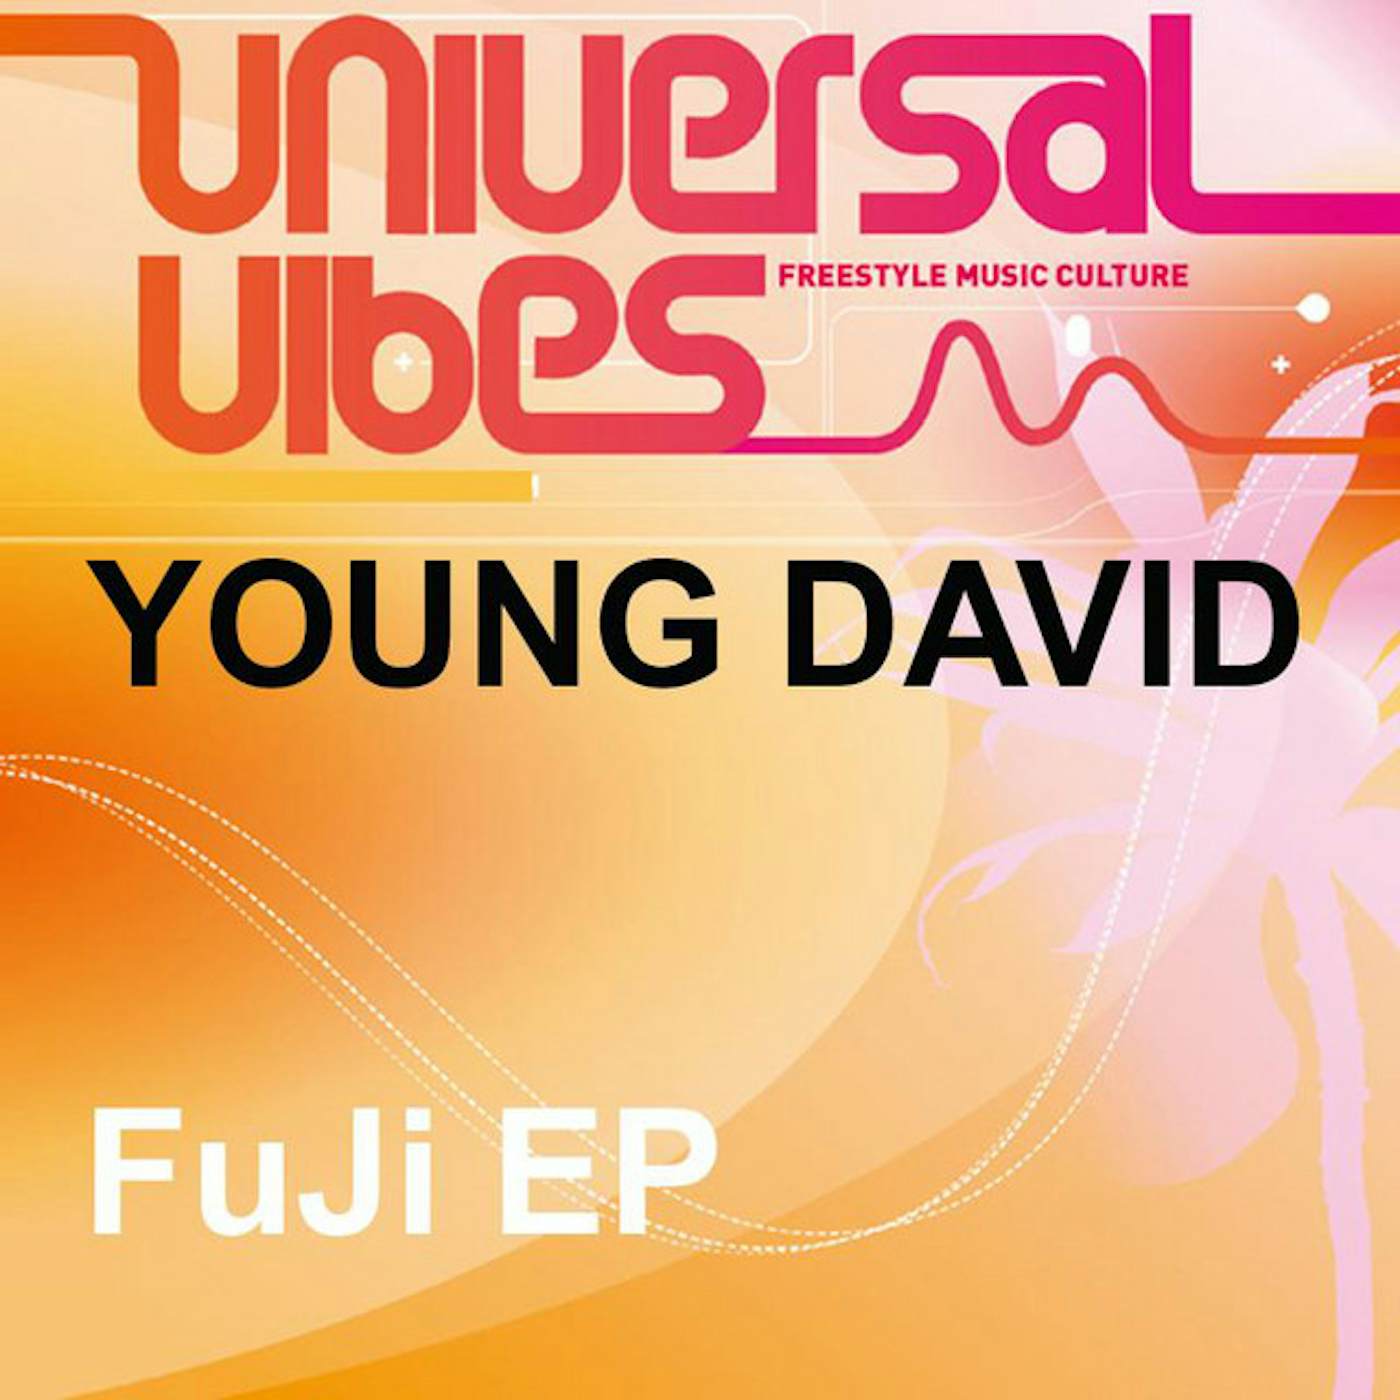 Young David FUJI EP Vinyl Record - UK Release